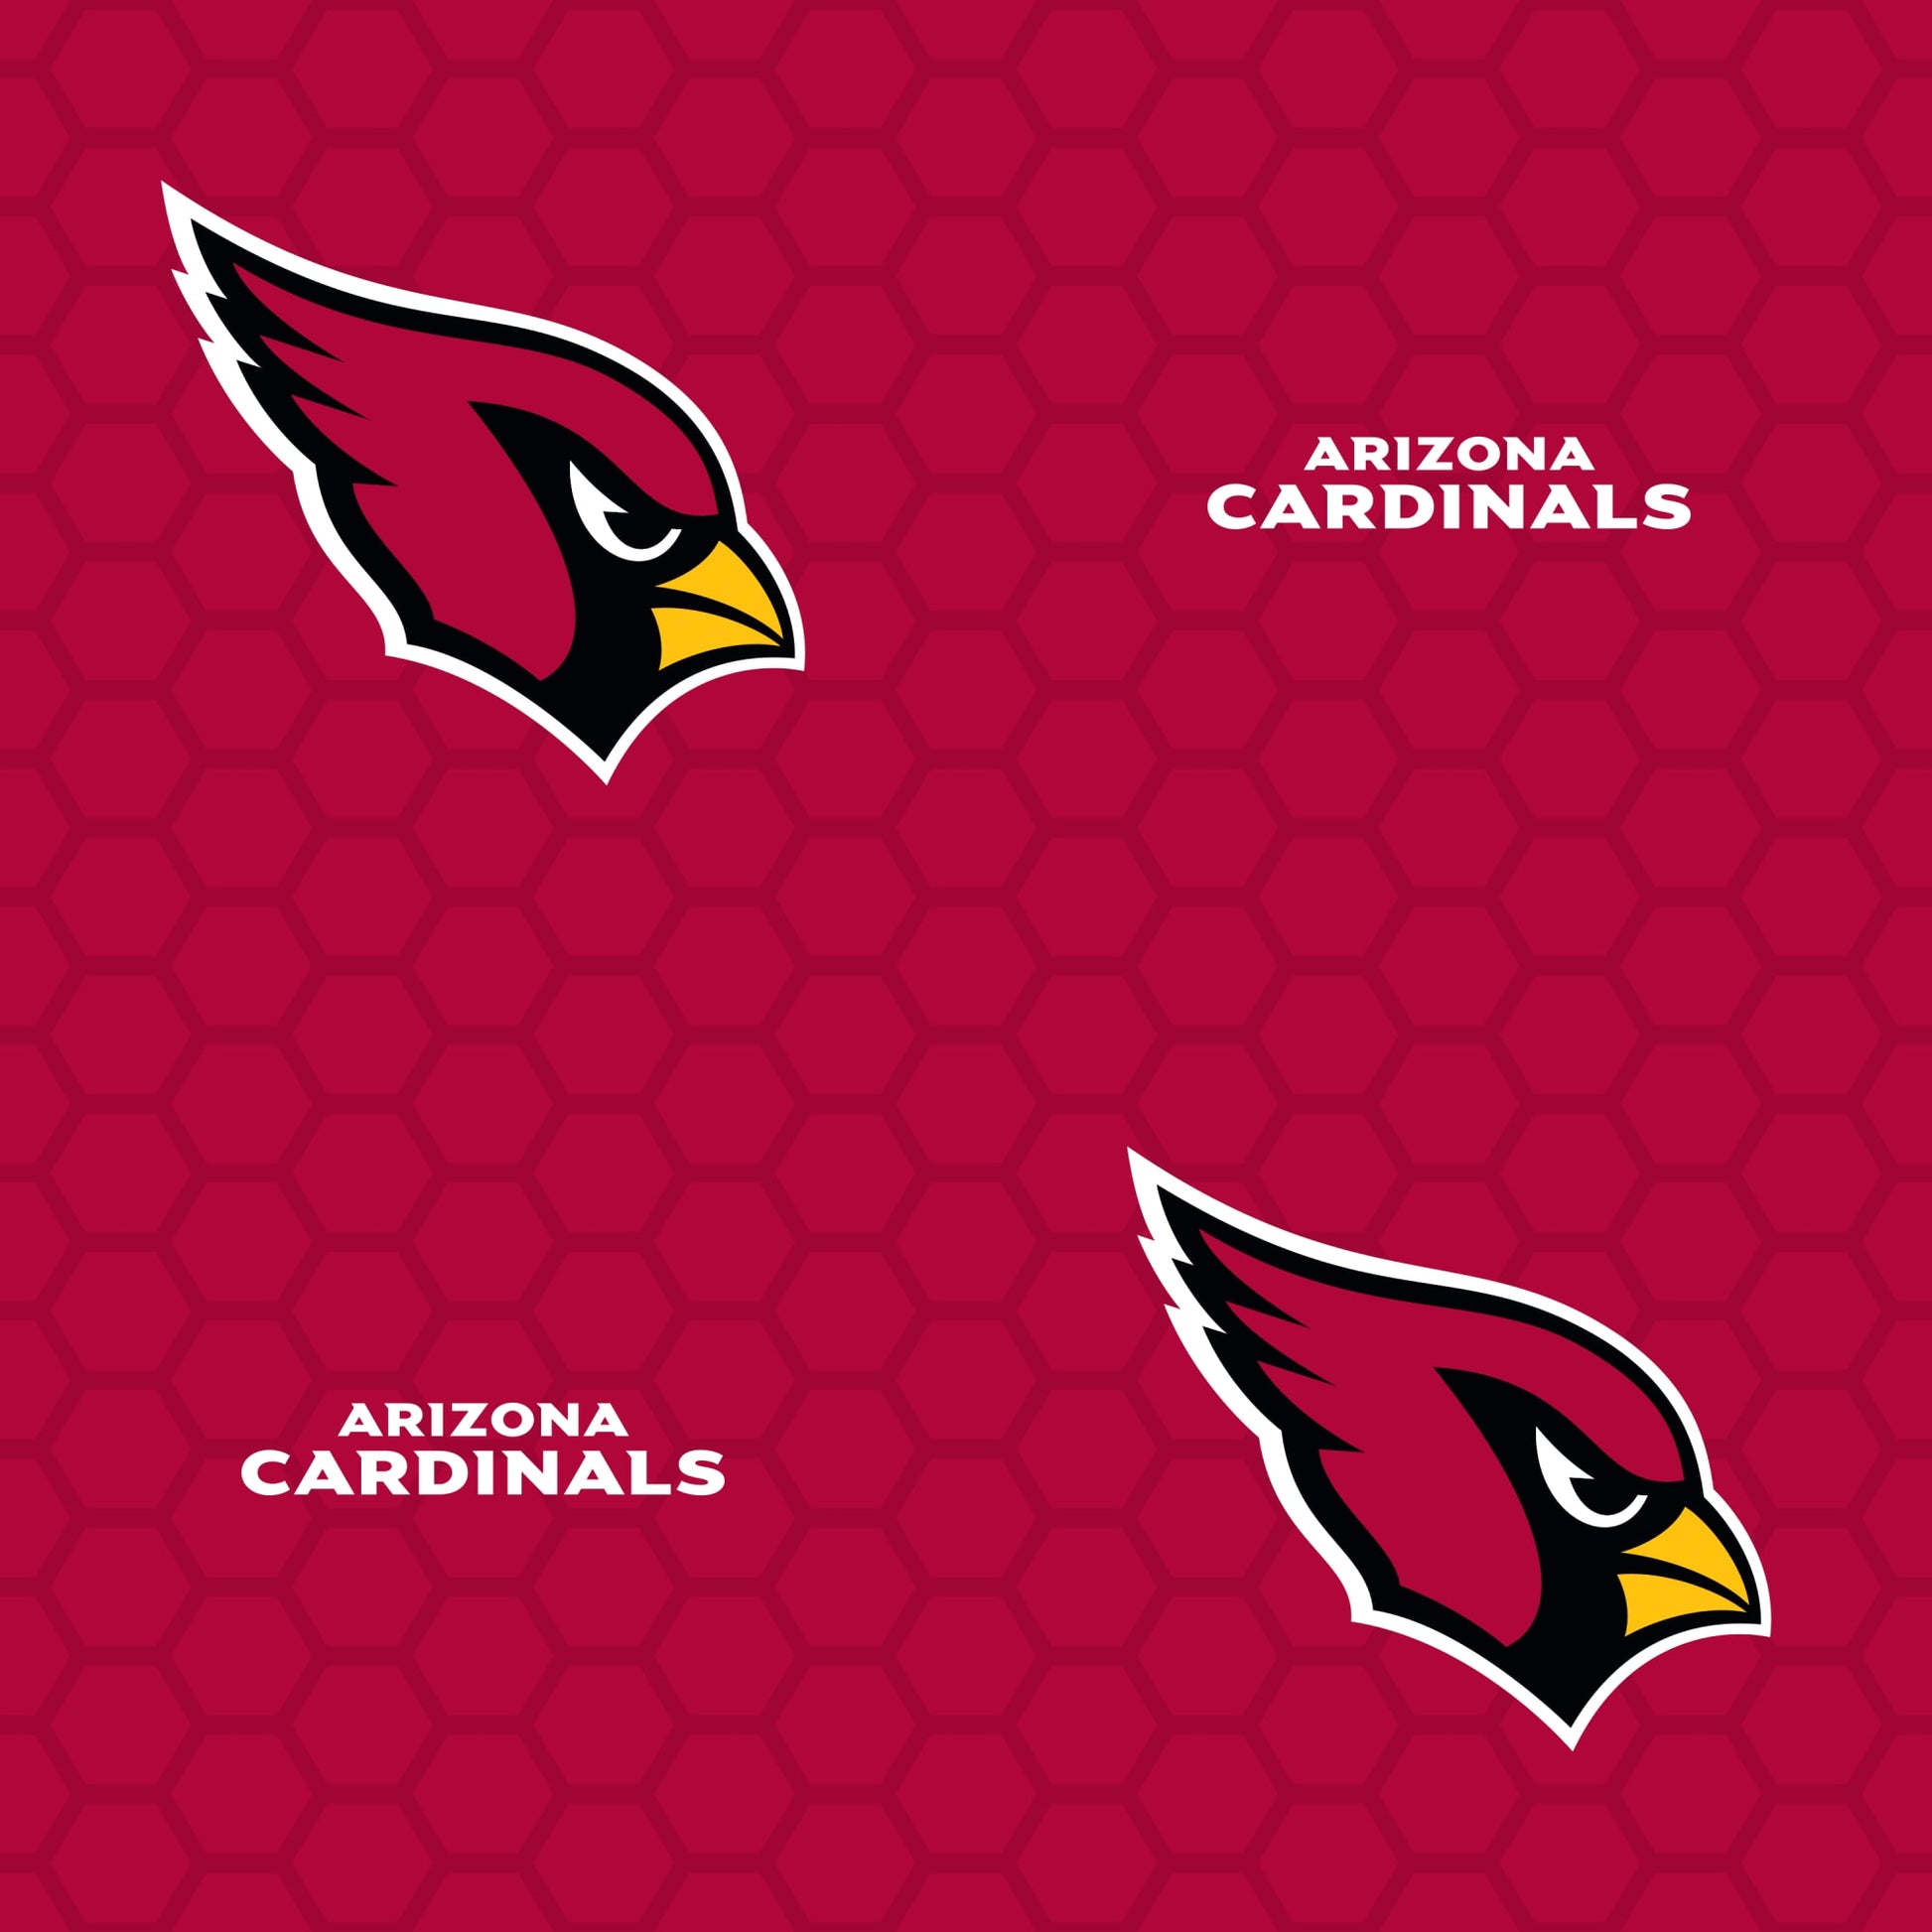 Atlanta Hawks Logo 10.5' L x 24' W Peel and Stick Wallpaper Roll Fathead Color: Red, NFL Team: Arizona Cardinals